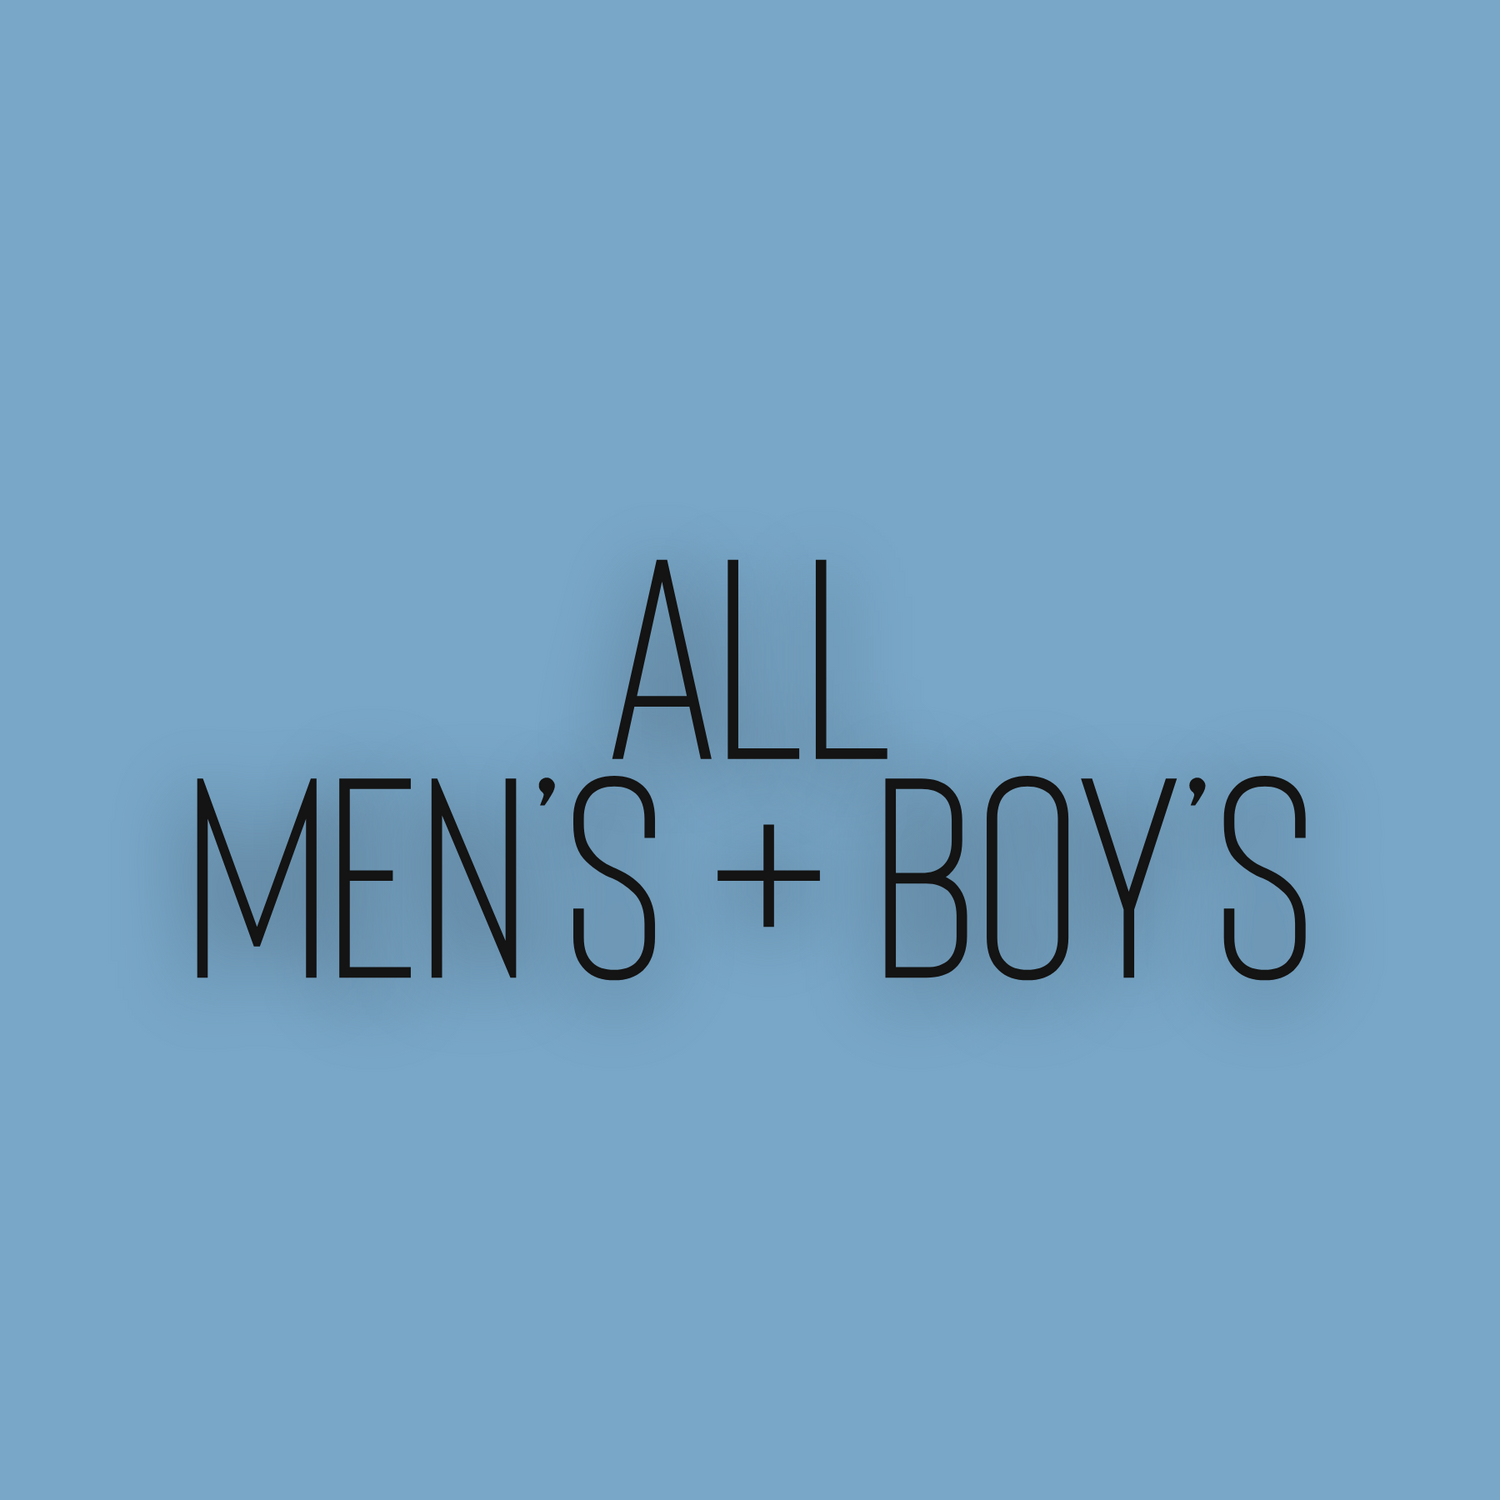 MEN'S + BOYS